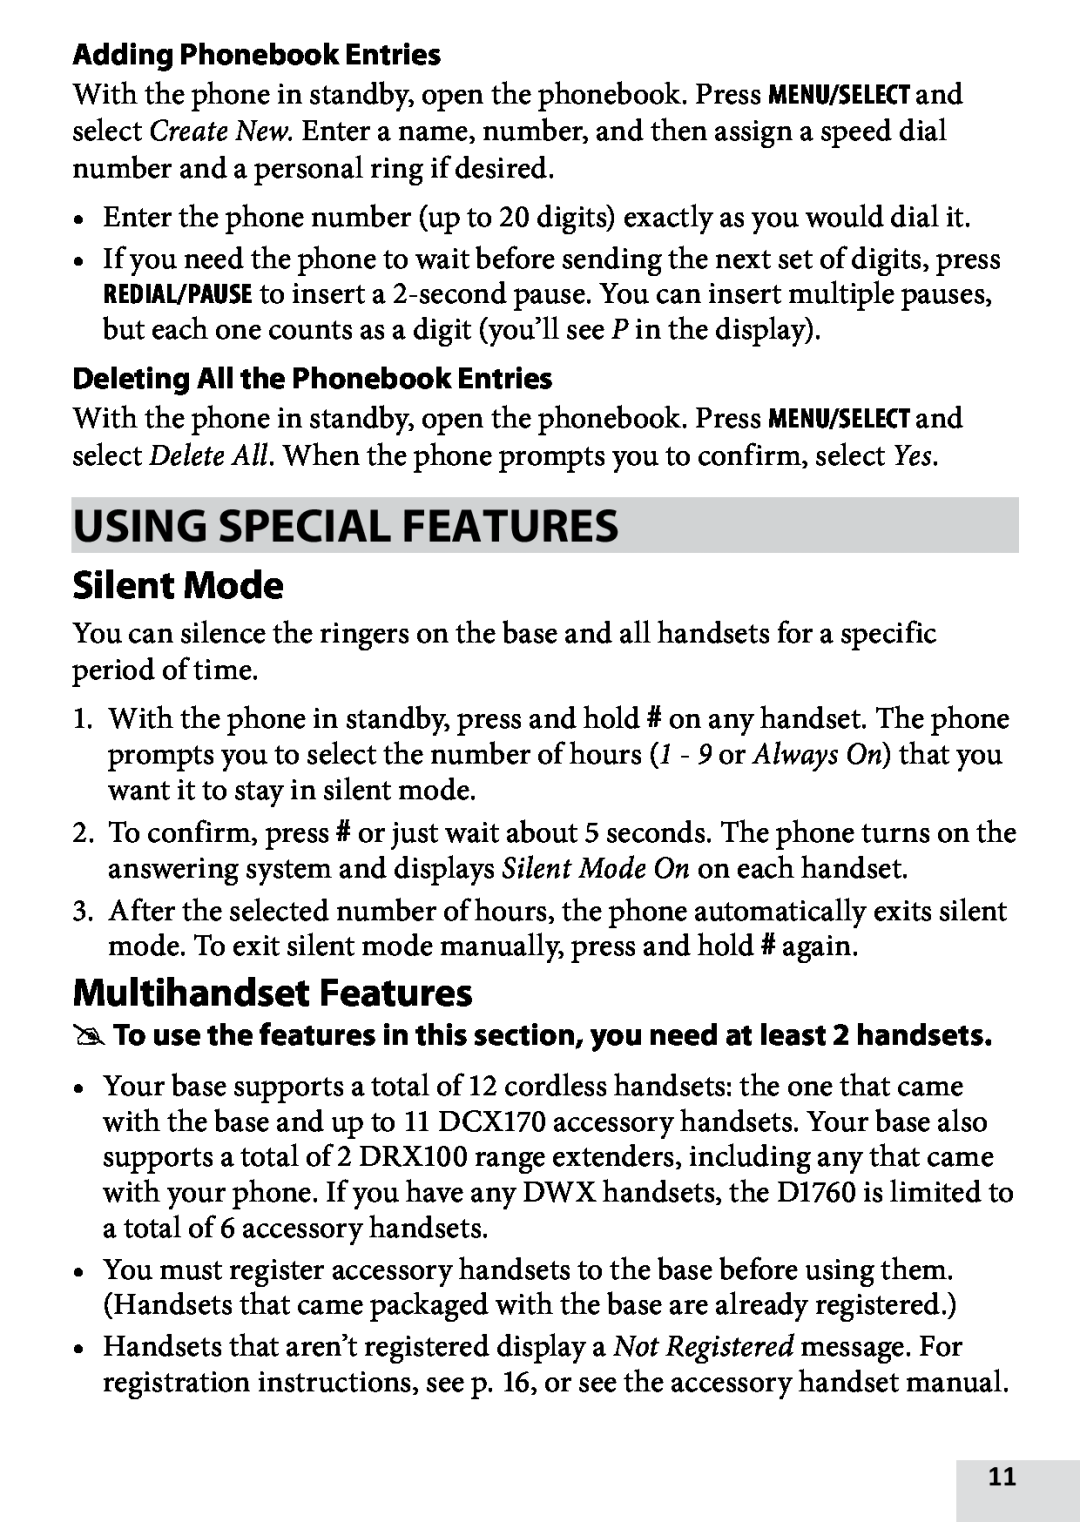 Uniden D1760-12, DRX100, D1760-2 Using Special Features, Silent Mode, Multihandset Features, Adding Phonebook Entries 